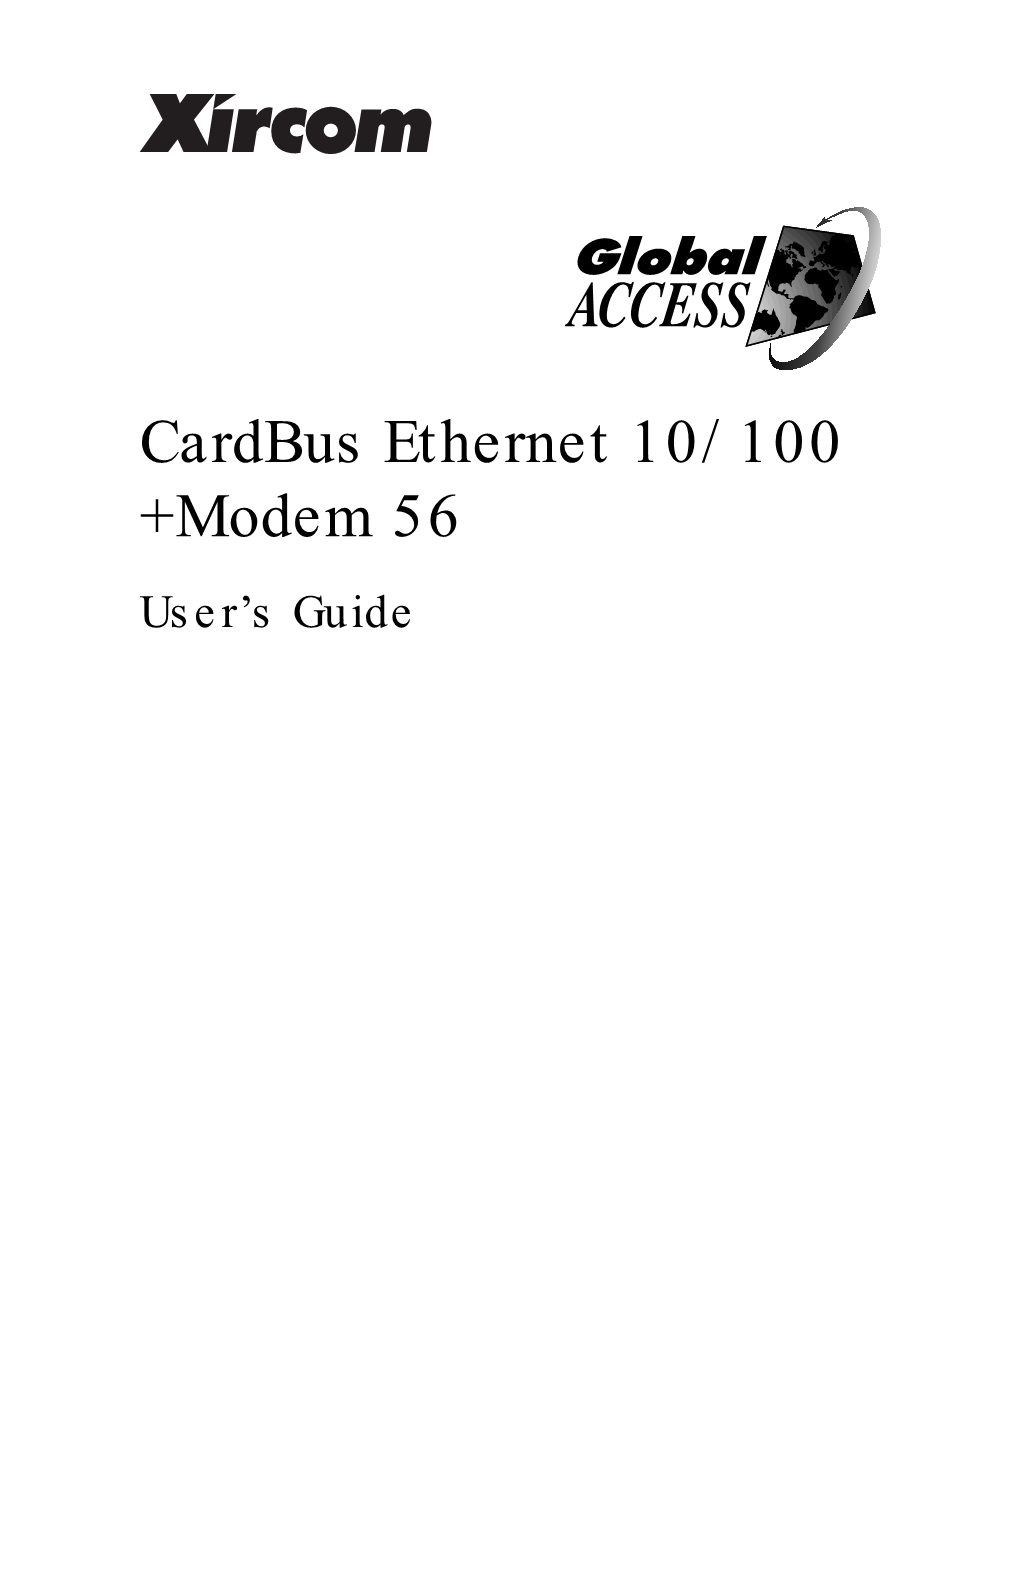 Cardbus Ethernet 10/100 +Modem 56 User’S Guide August 1998